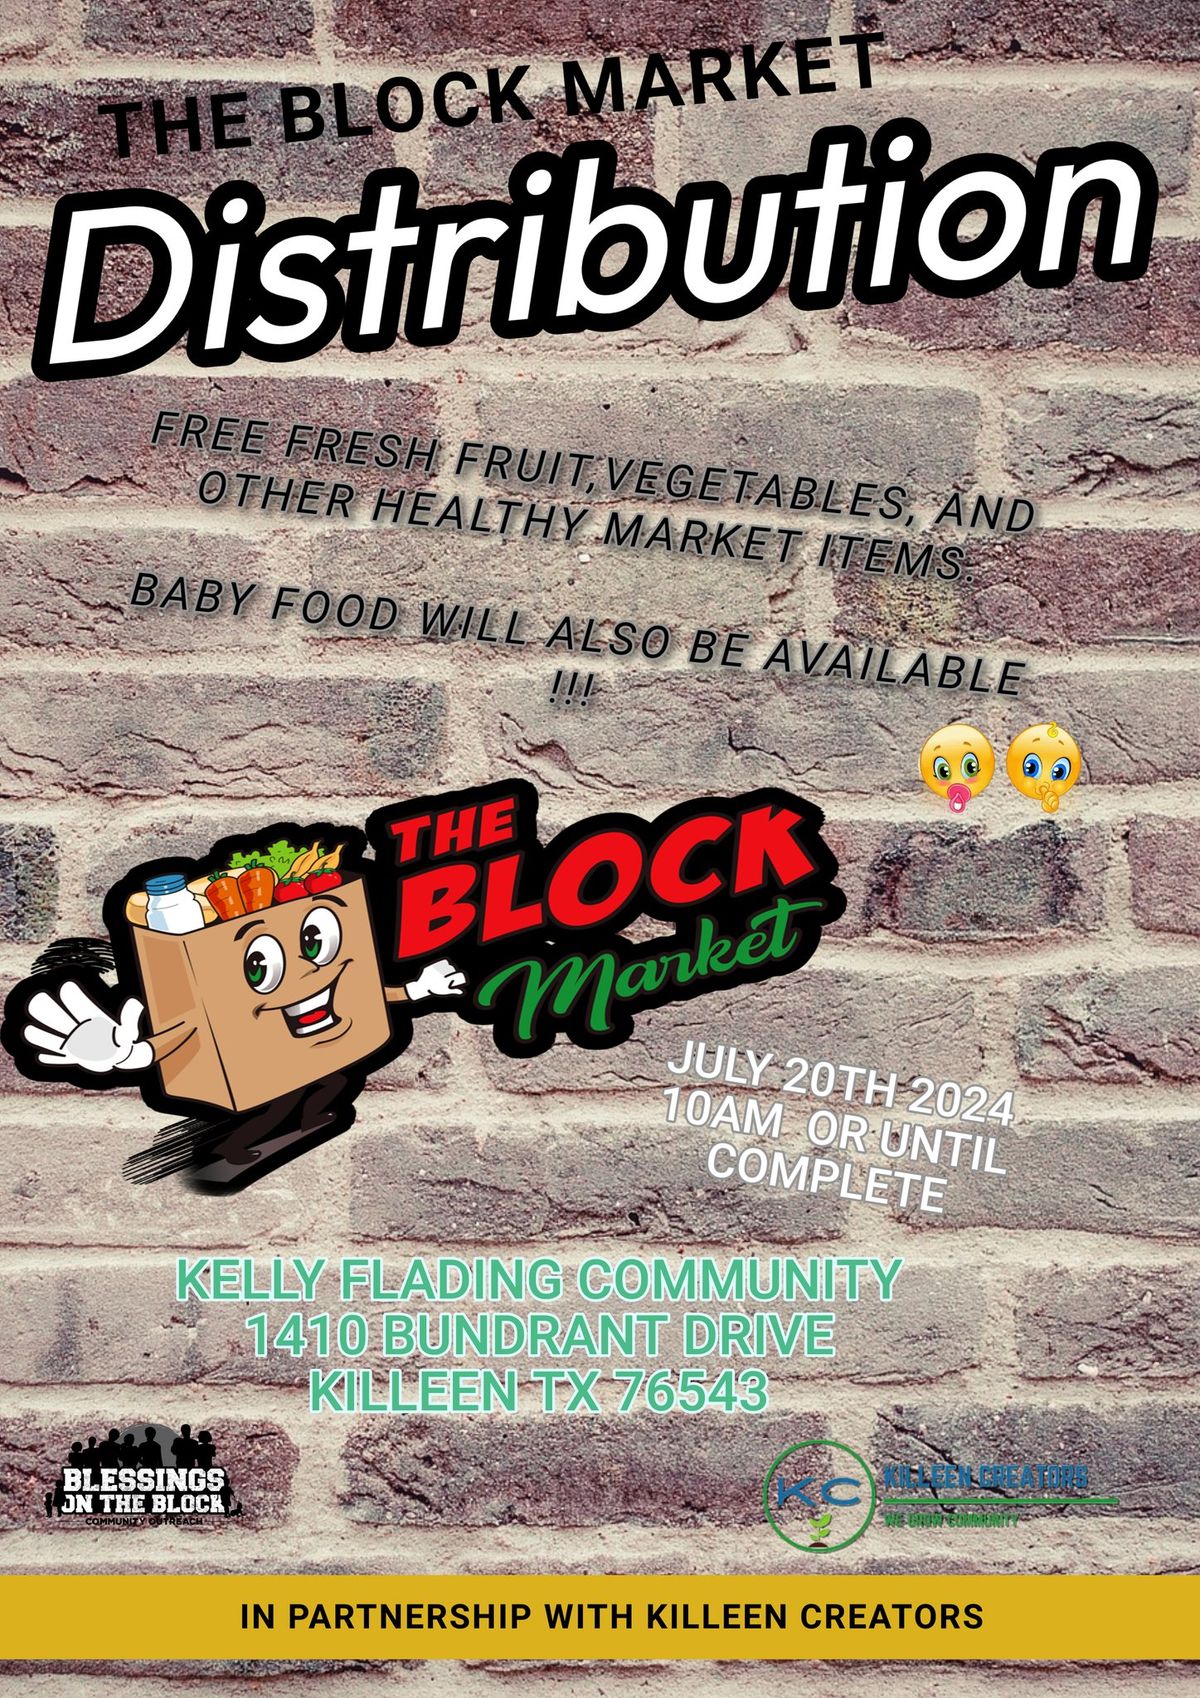 The Block Market Distribution